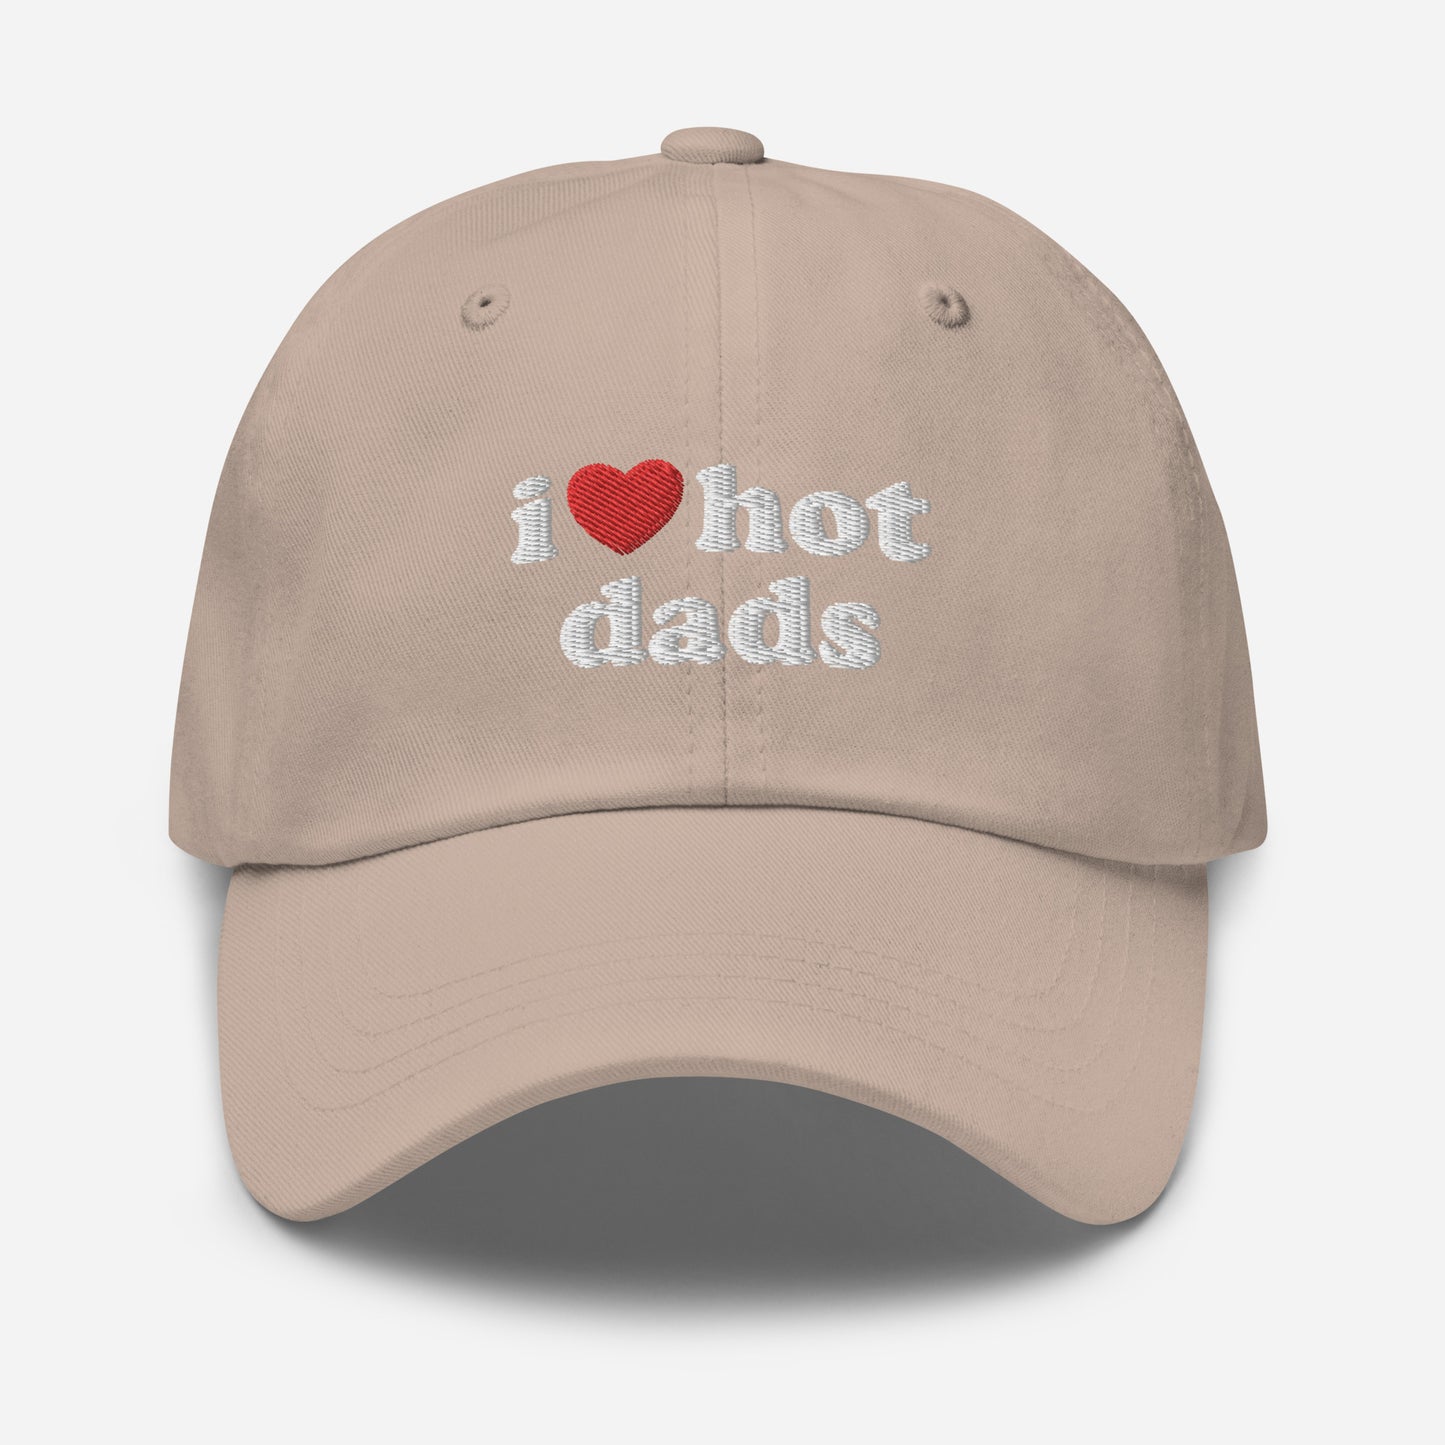 I Love Hot Dads Hat